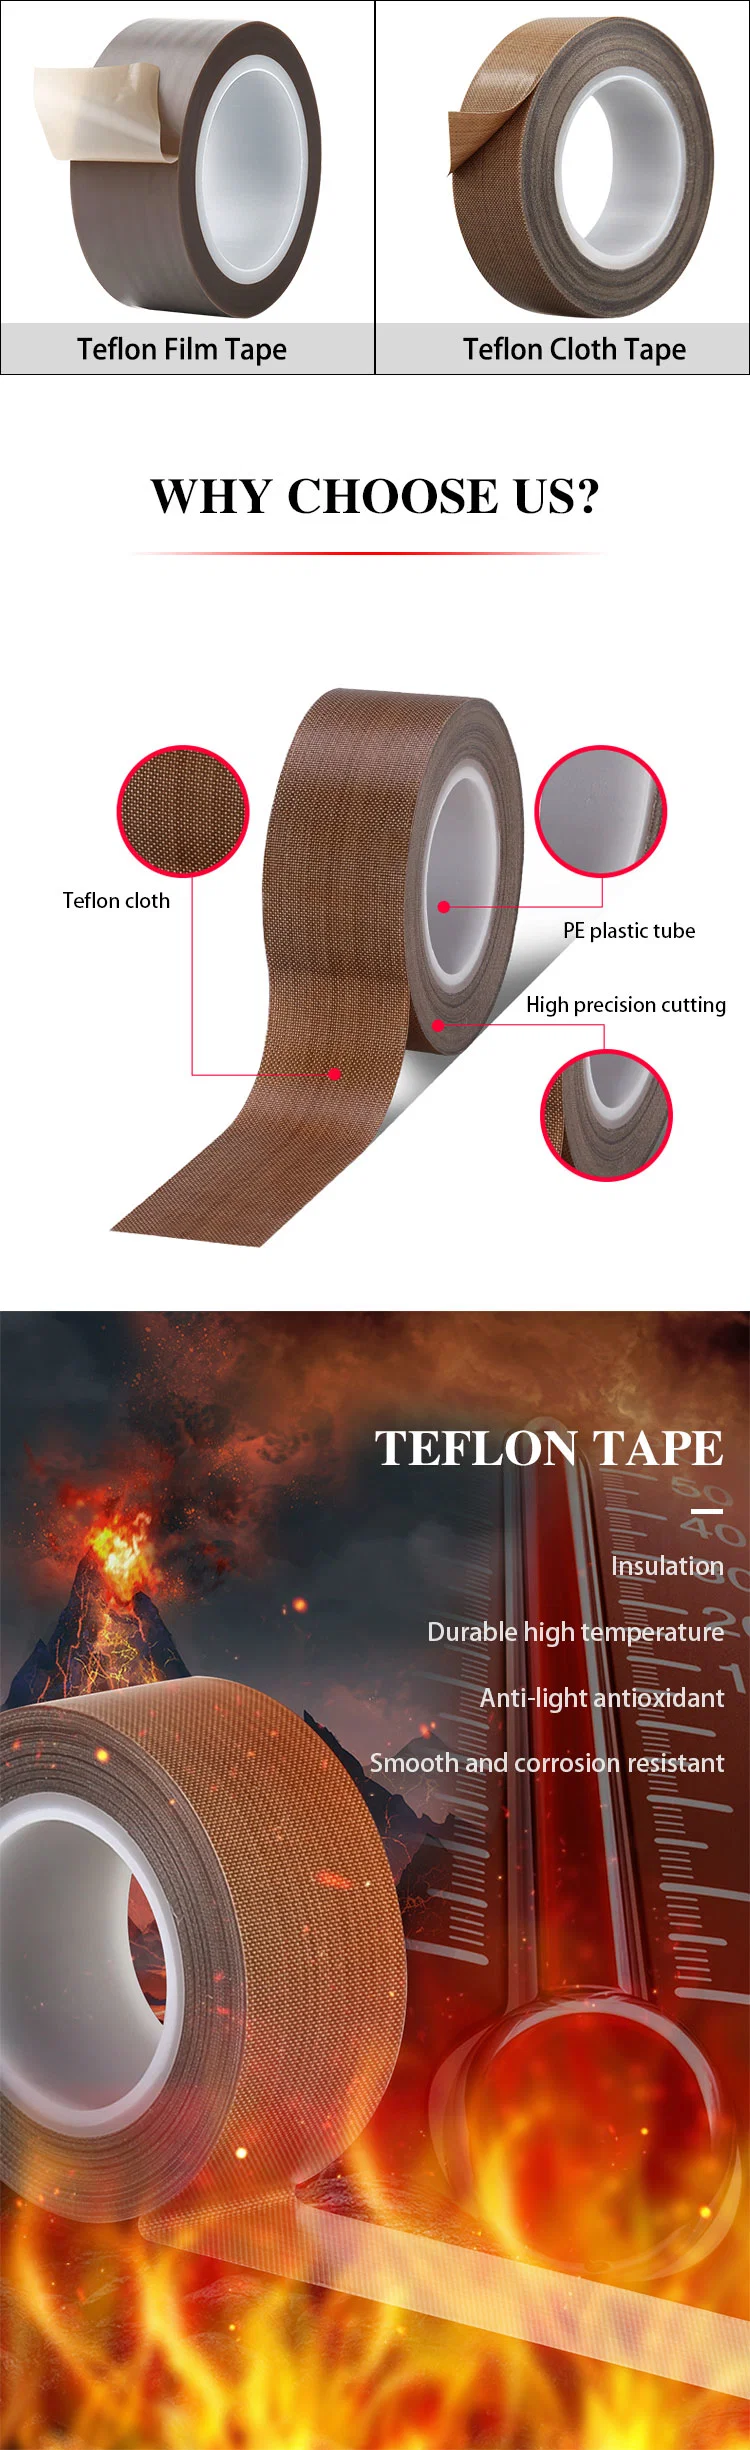 Fire Insulation High Temperature Fabrics PTFE Glass Fabric Adhesive Tape